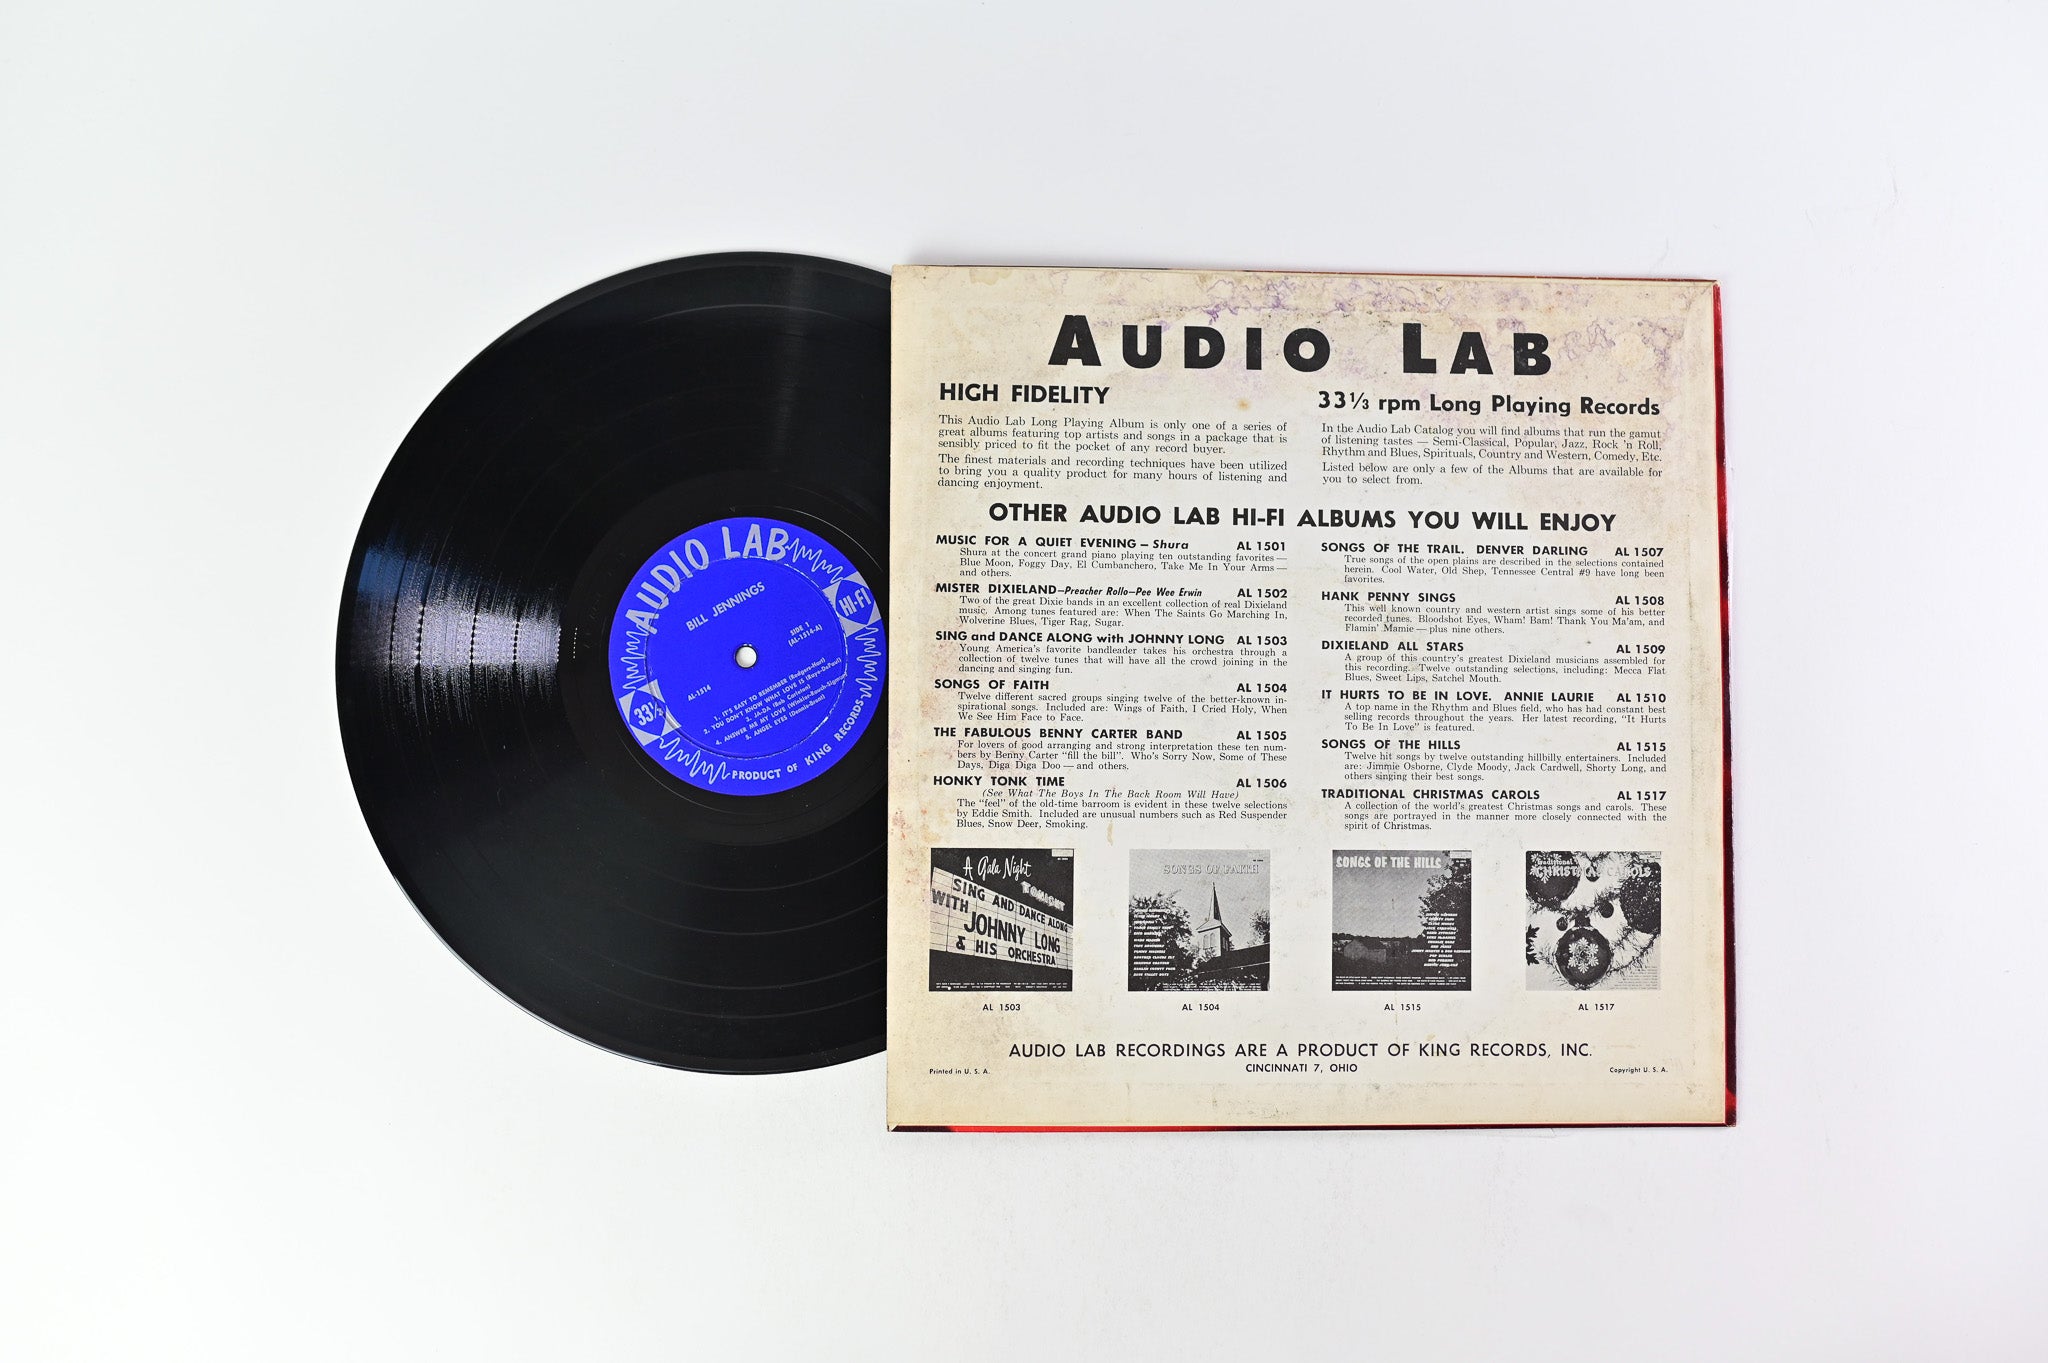 Bill Jennings - Guitar Vibes on Audio Lab Mono Deep Groove Reissue